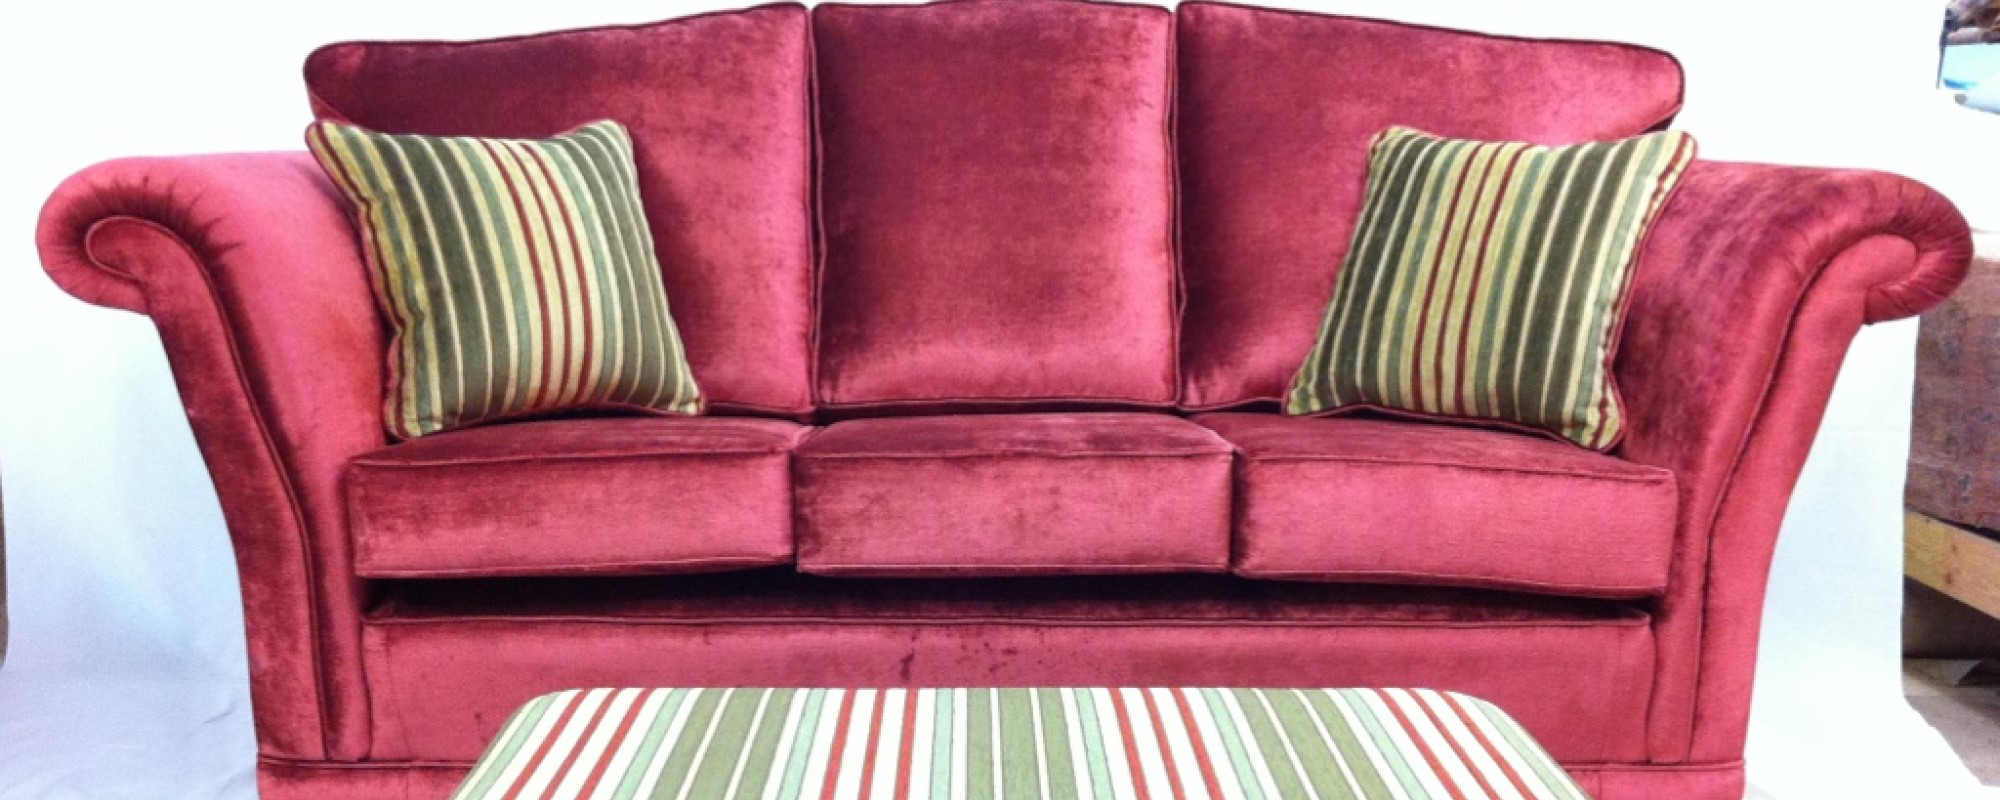 empress sofa designs ralvern upholstery cannock